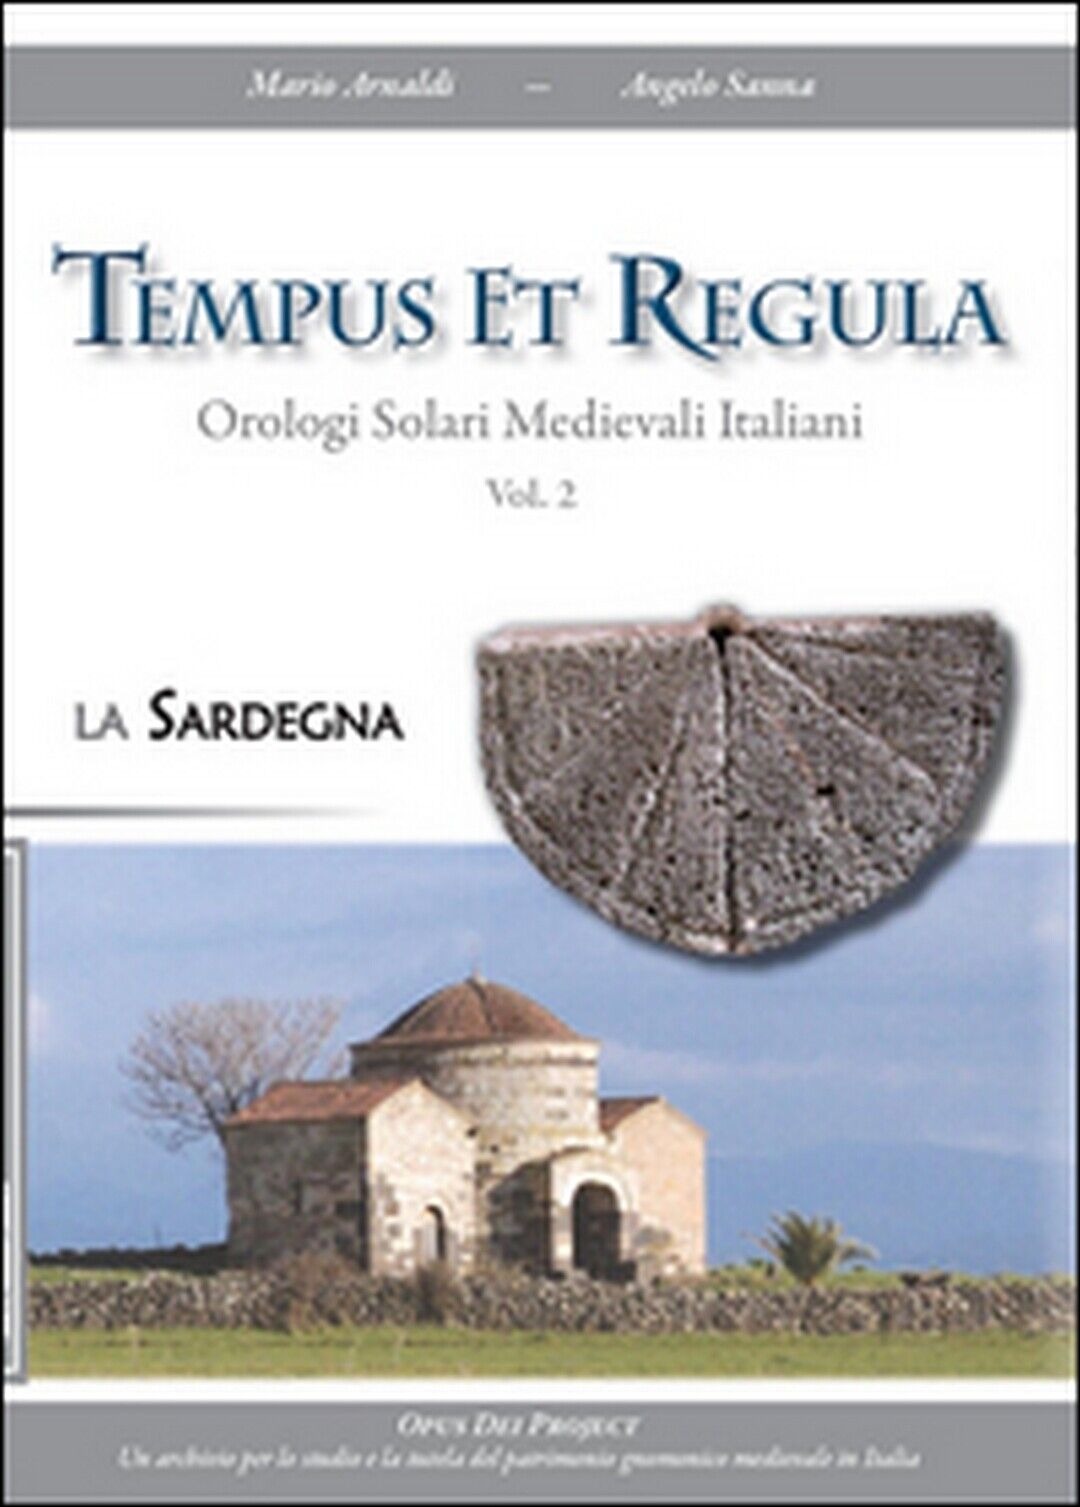 Tempus et regula. Orologi solari medievali italiani Vol.2, di Sanna e Arnaldi